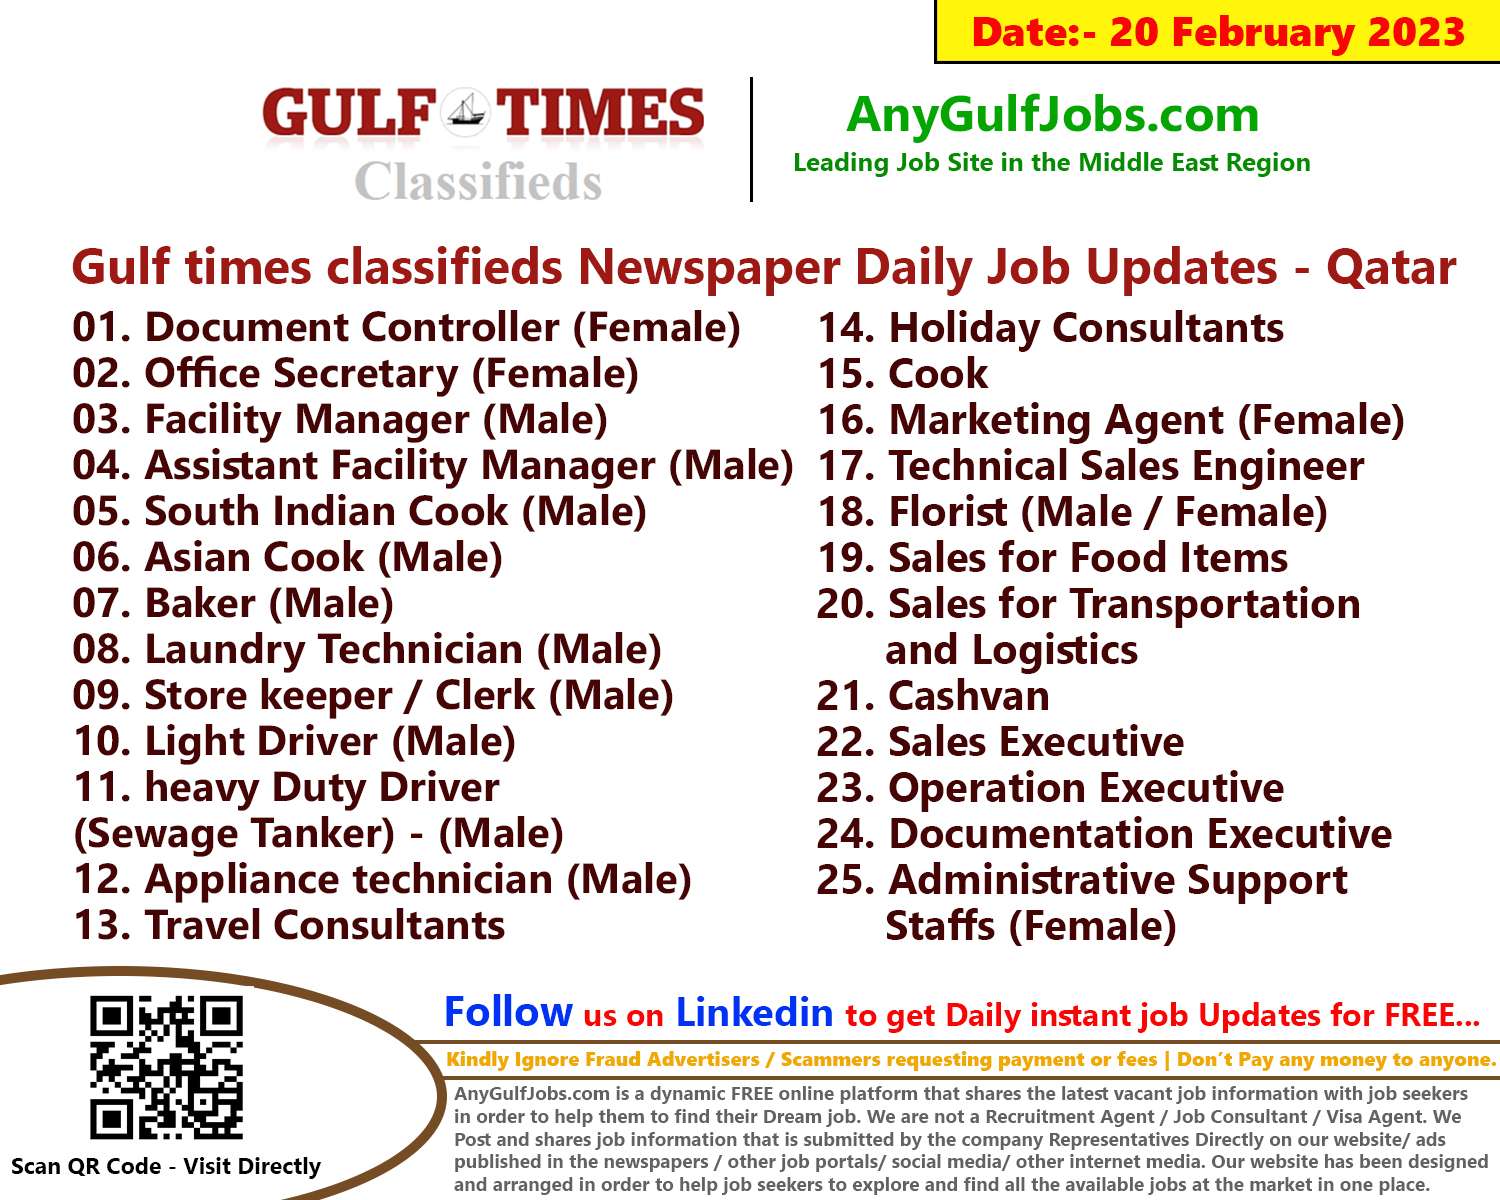 Gulf times classifieds Job Vacancies Qatar - 20 February 2023